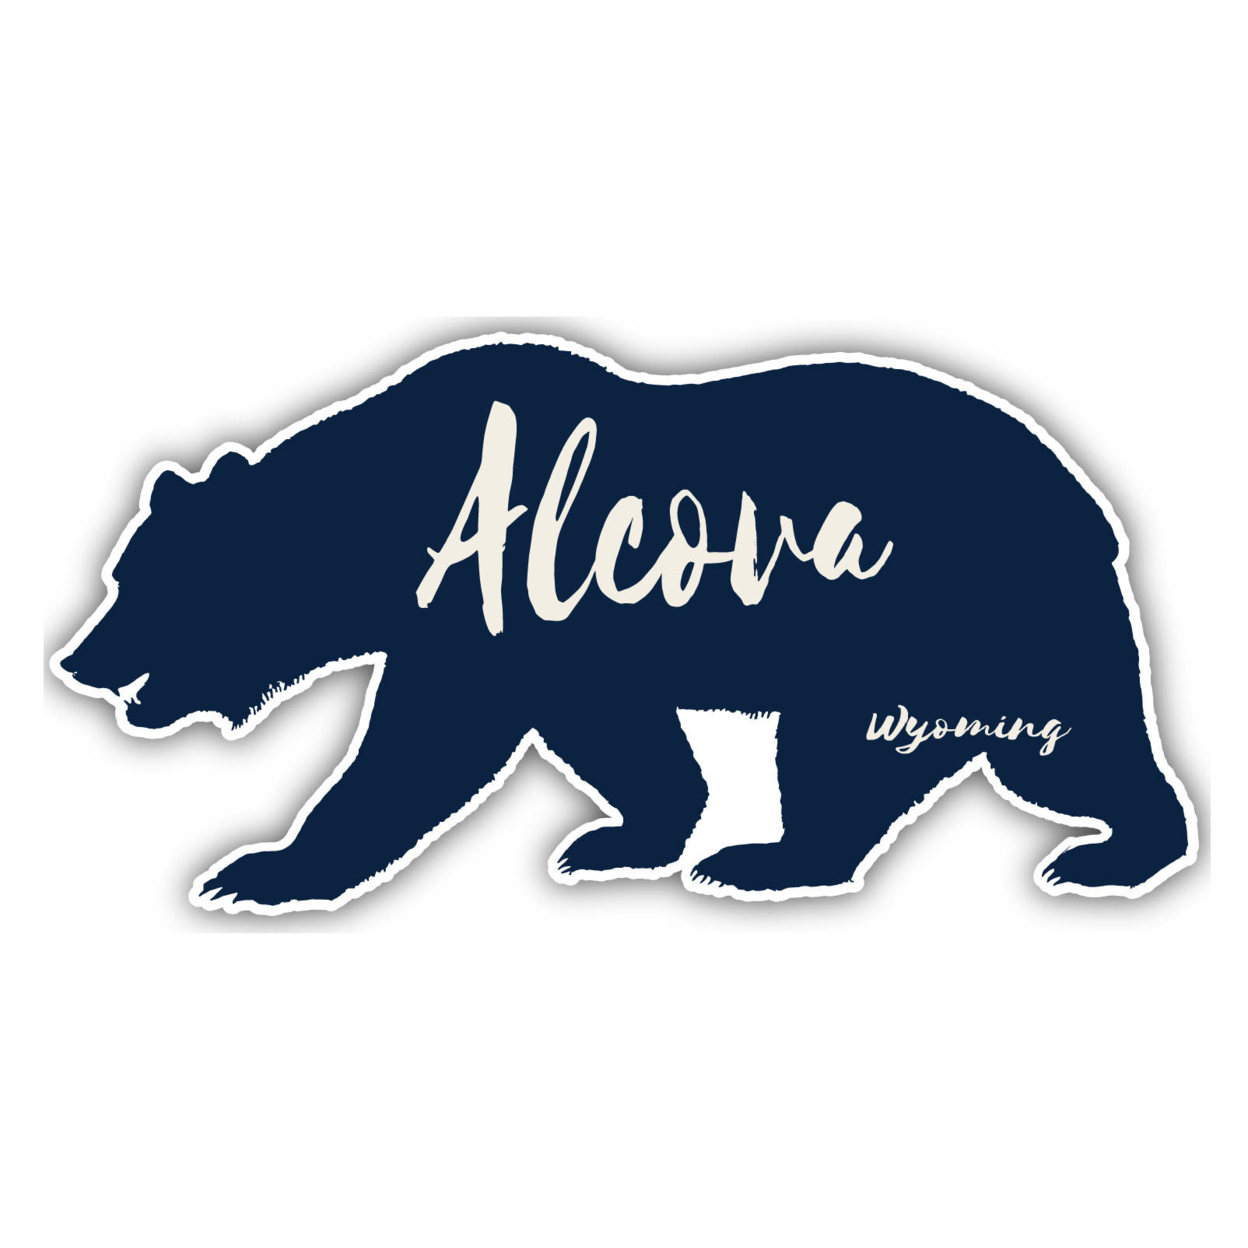 Alcova Wyoming Souvenir Decorative Stickers (Choose Theme And Size) - Single Unit, 2-Inch, Tent